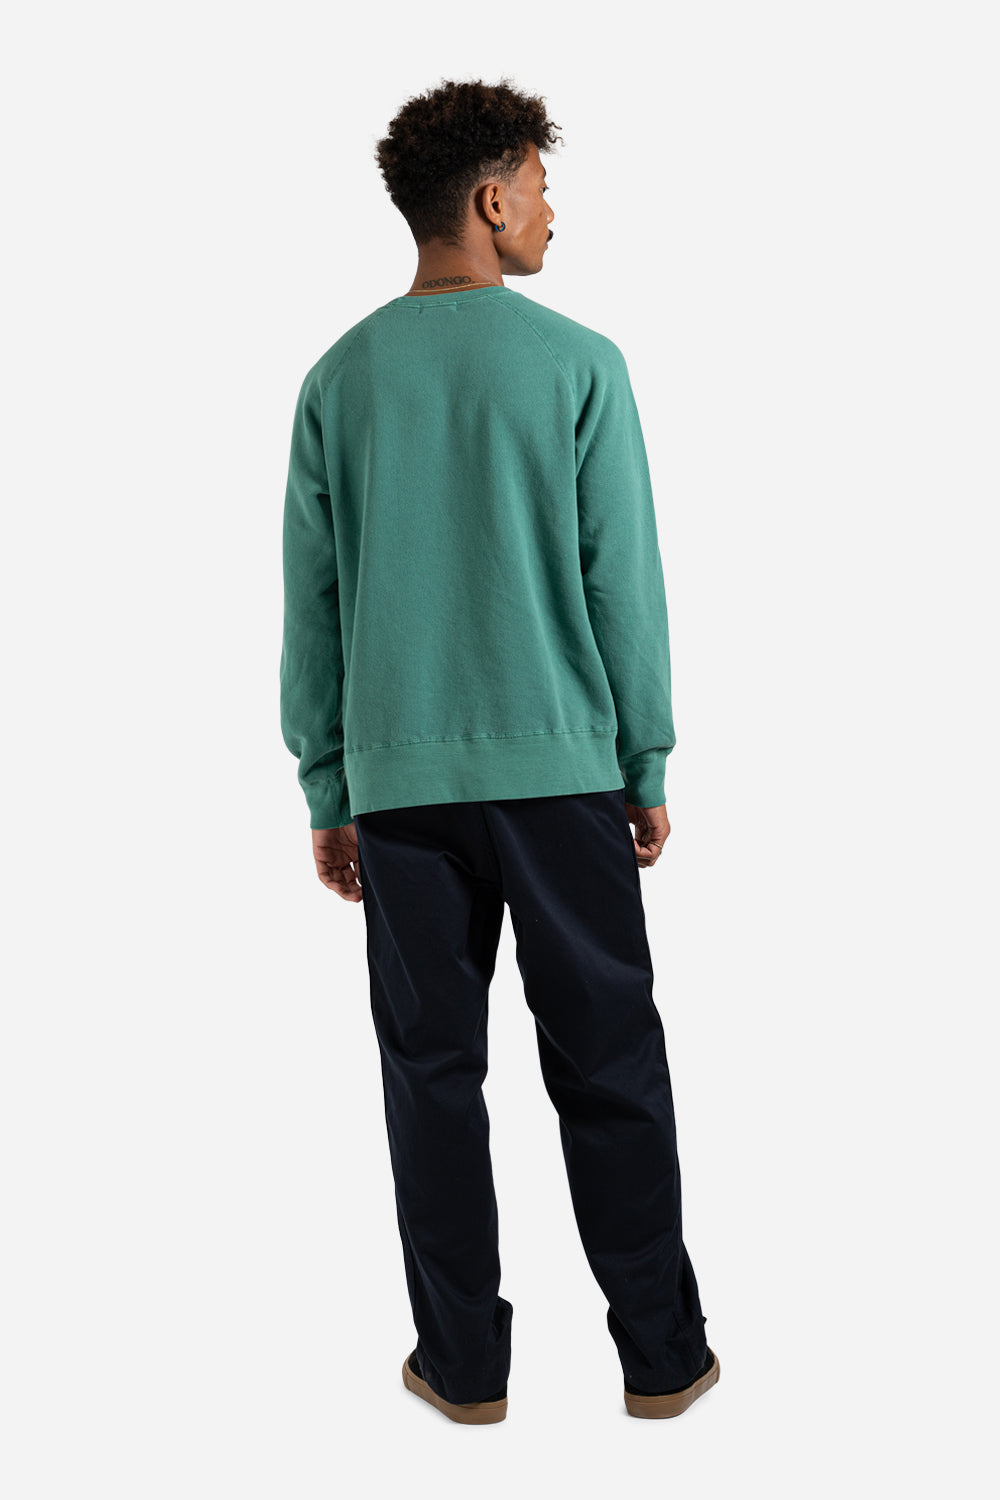 Freedom-Sweatshirt-Crewneck-8oz-Pigment-Evergreen